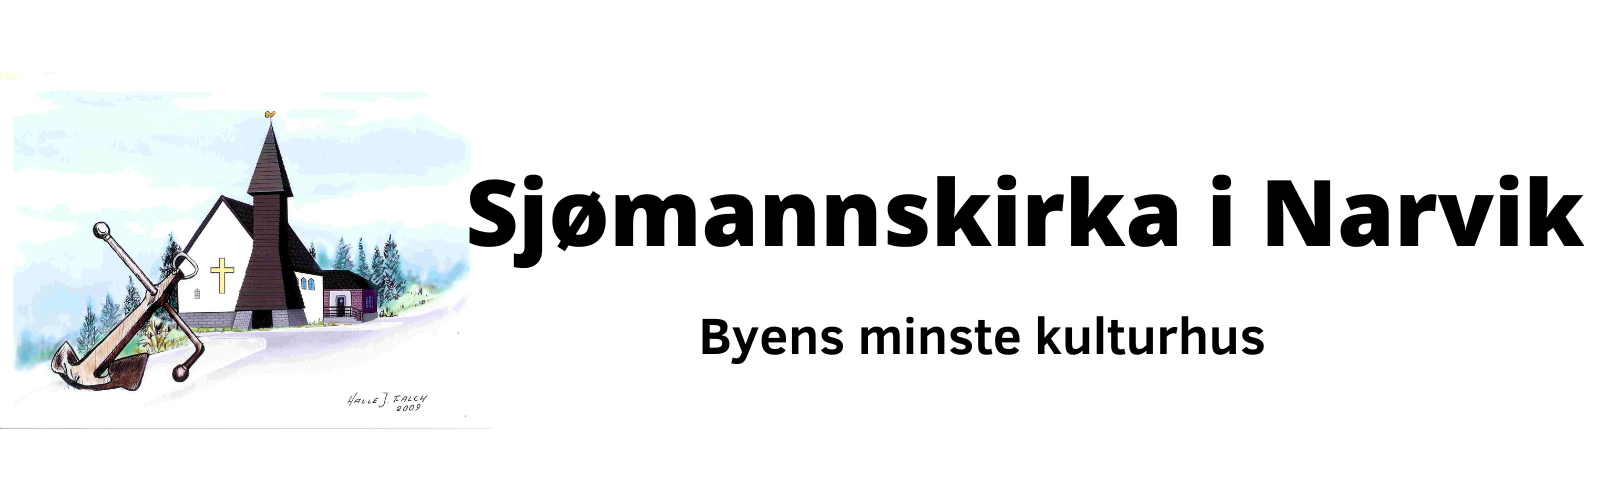 Logo for Sjømannskirka i Narvik